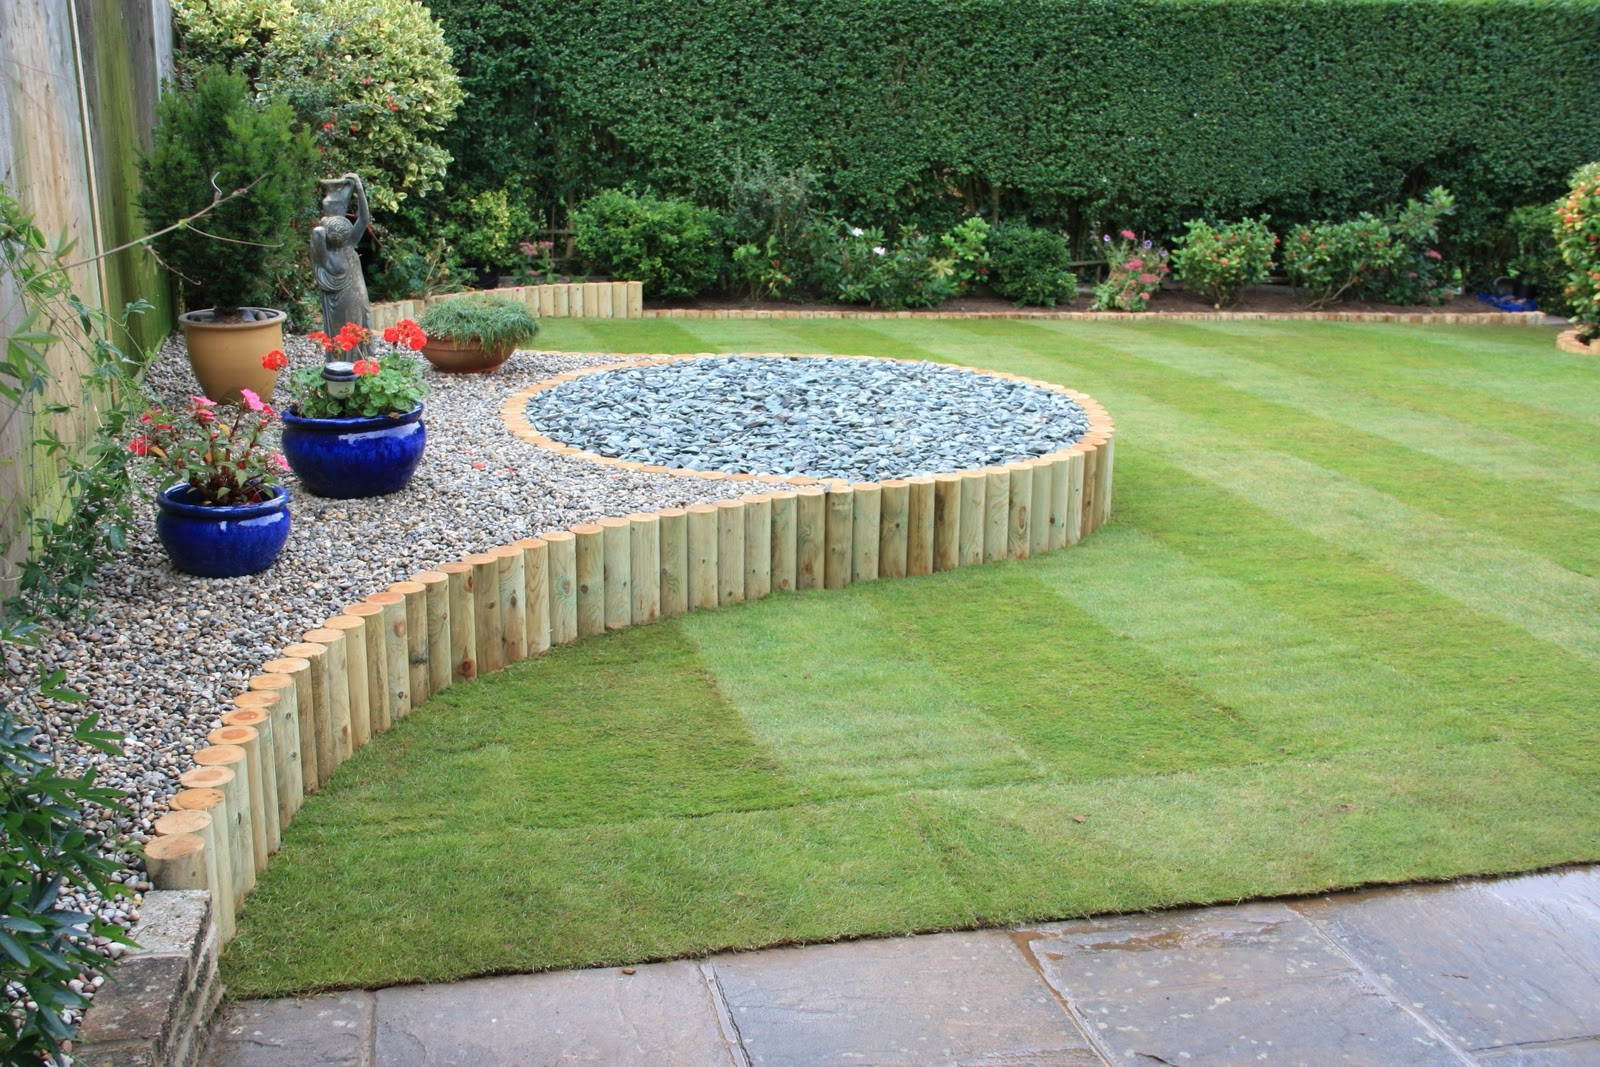 Best ideas about Easy Backyard Ideas
. Save or Pin Simple Backyard Design Amazing Beautiful Landscape Ideas Now.